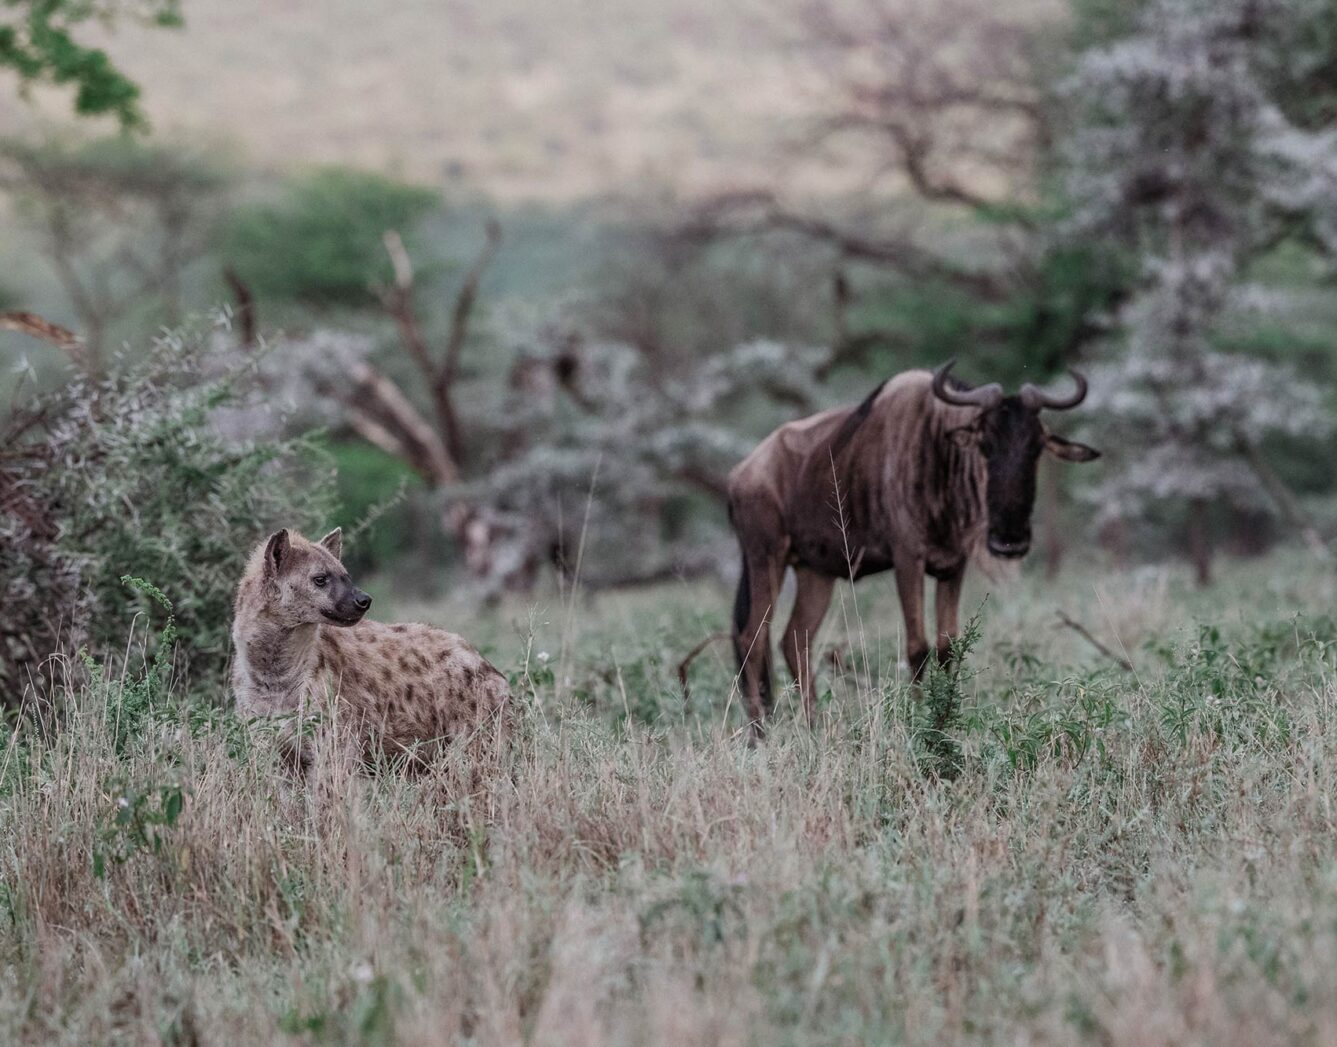 A hyena stands near a wildebeest in the grass